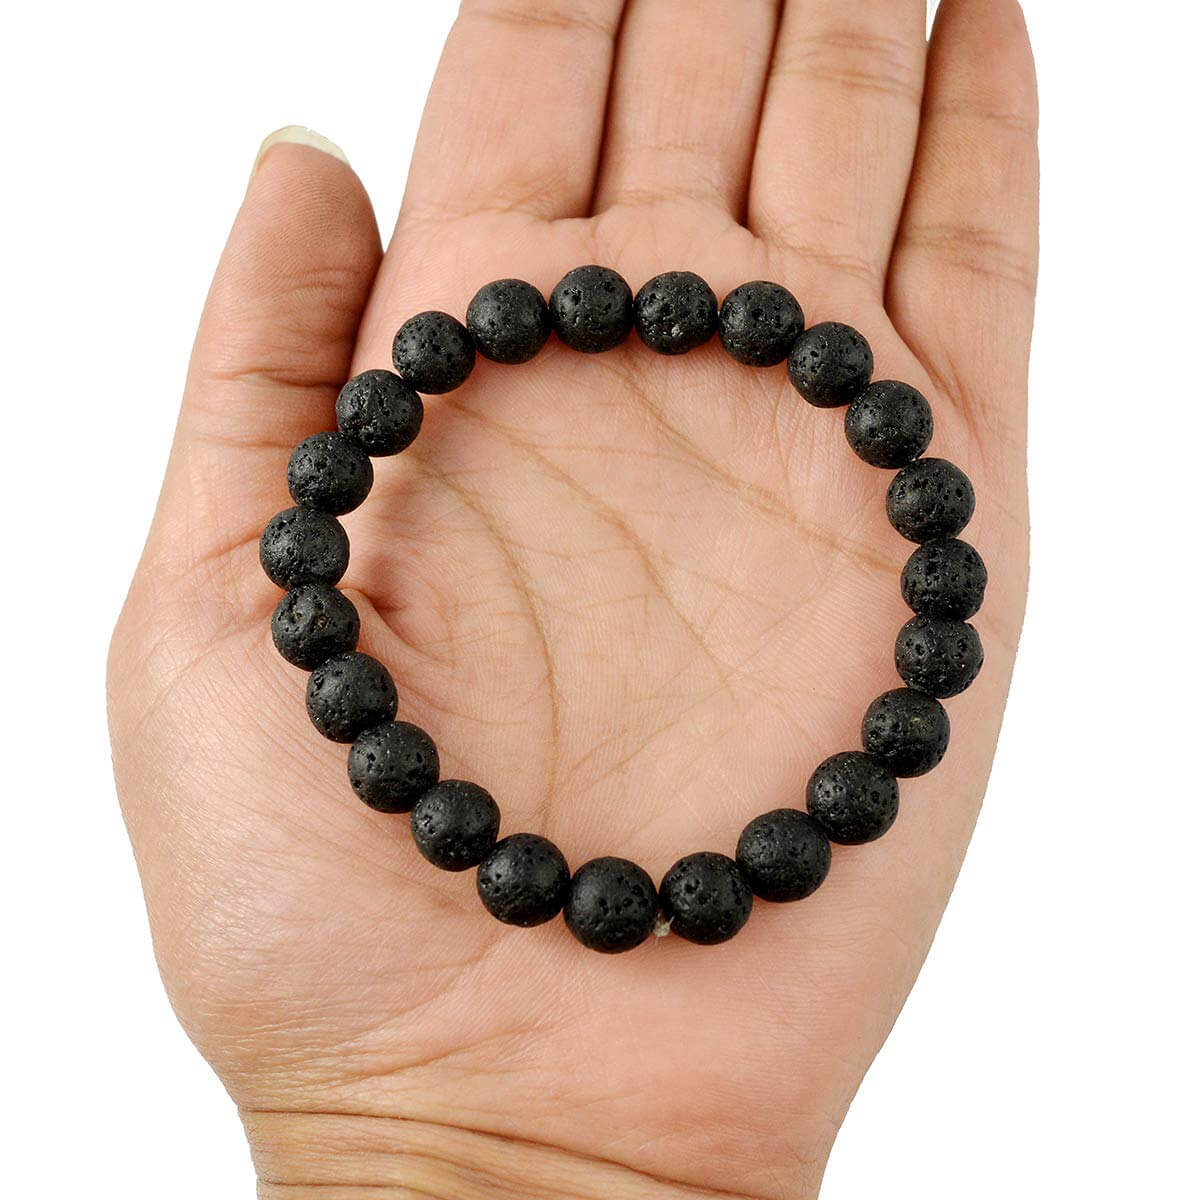 Buy REBUY Natural Black Crystal Lava Stone Yoga Meditation Buddha Bracelet  for Men and Women Online at Low Prices in India  Paytmmallcom